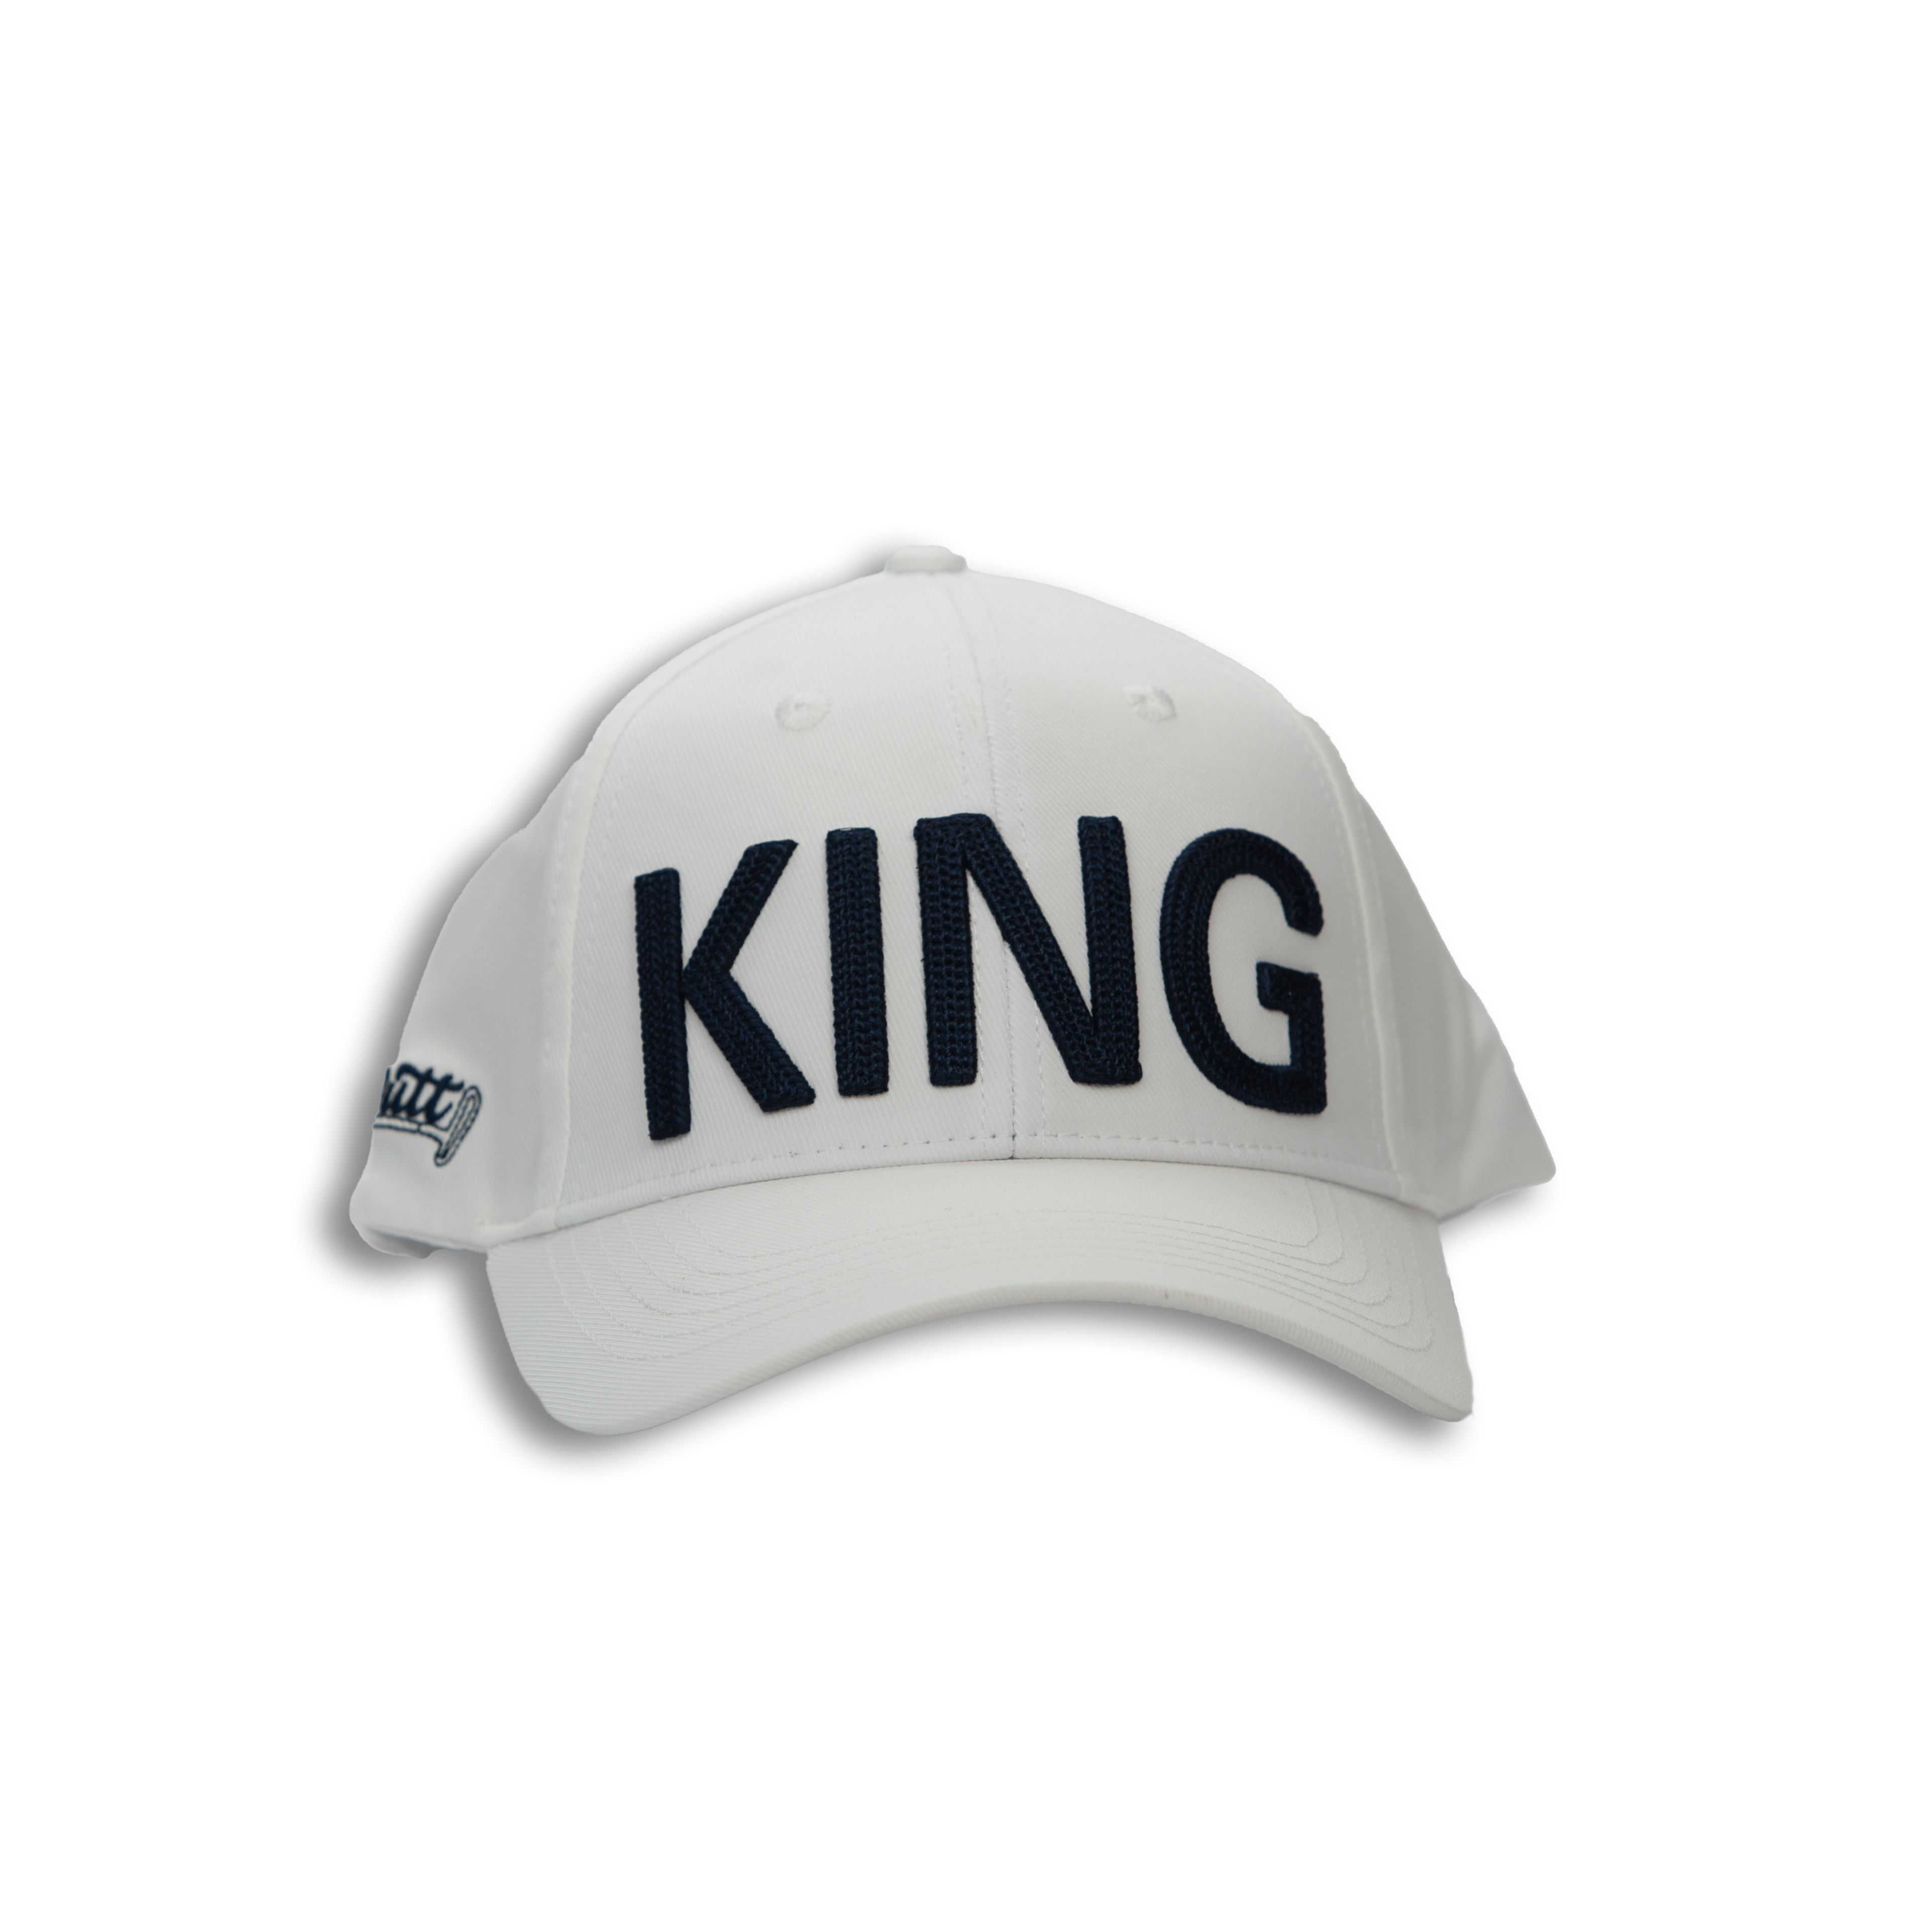 KING Hat